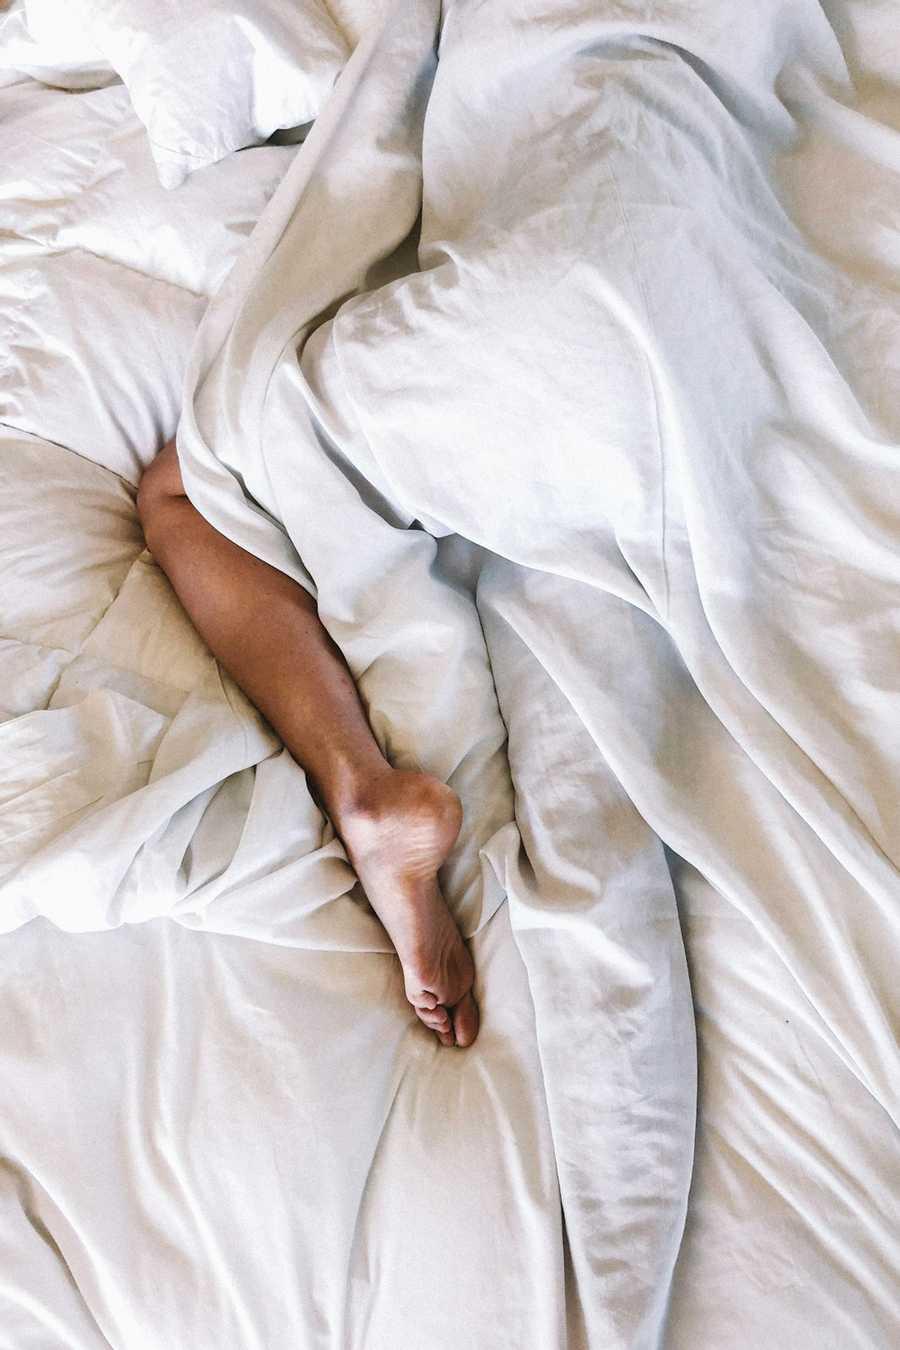 4. Sleep disturbances or constant fatigue